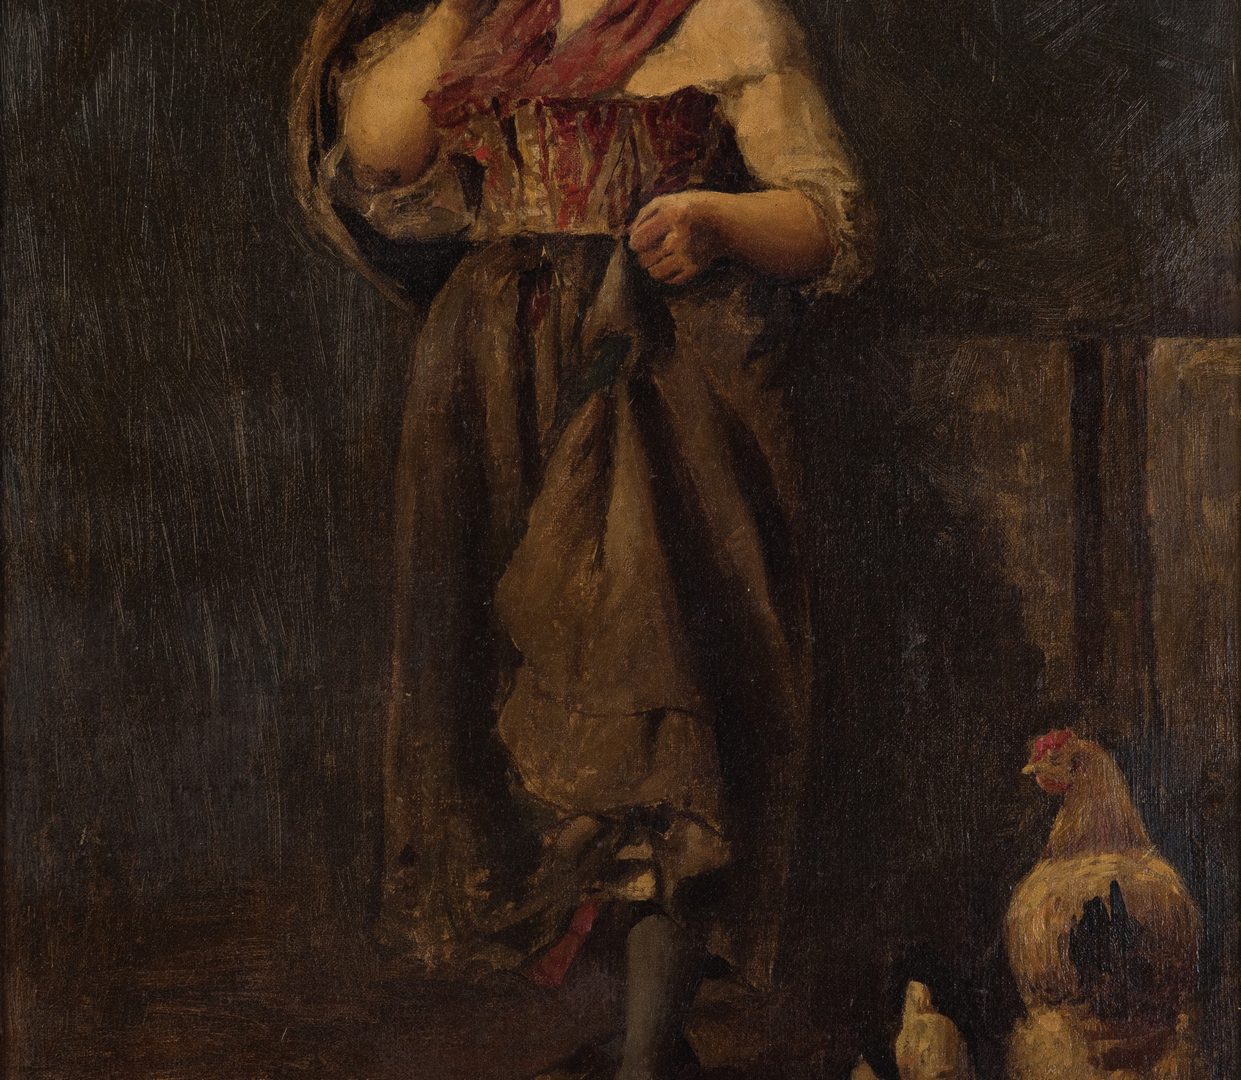 Lot 685: Italian Peasant Girl Feeding Chickens, Attr. Vince